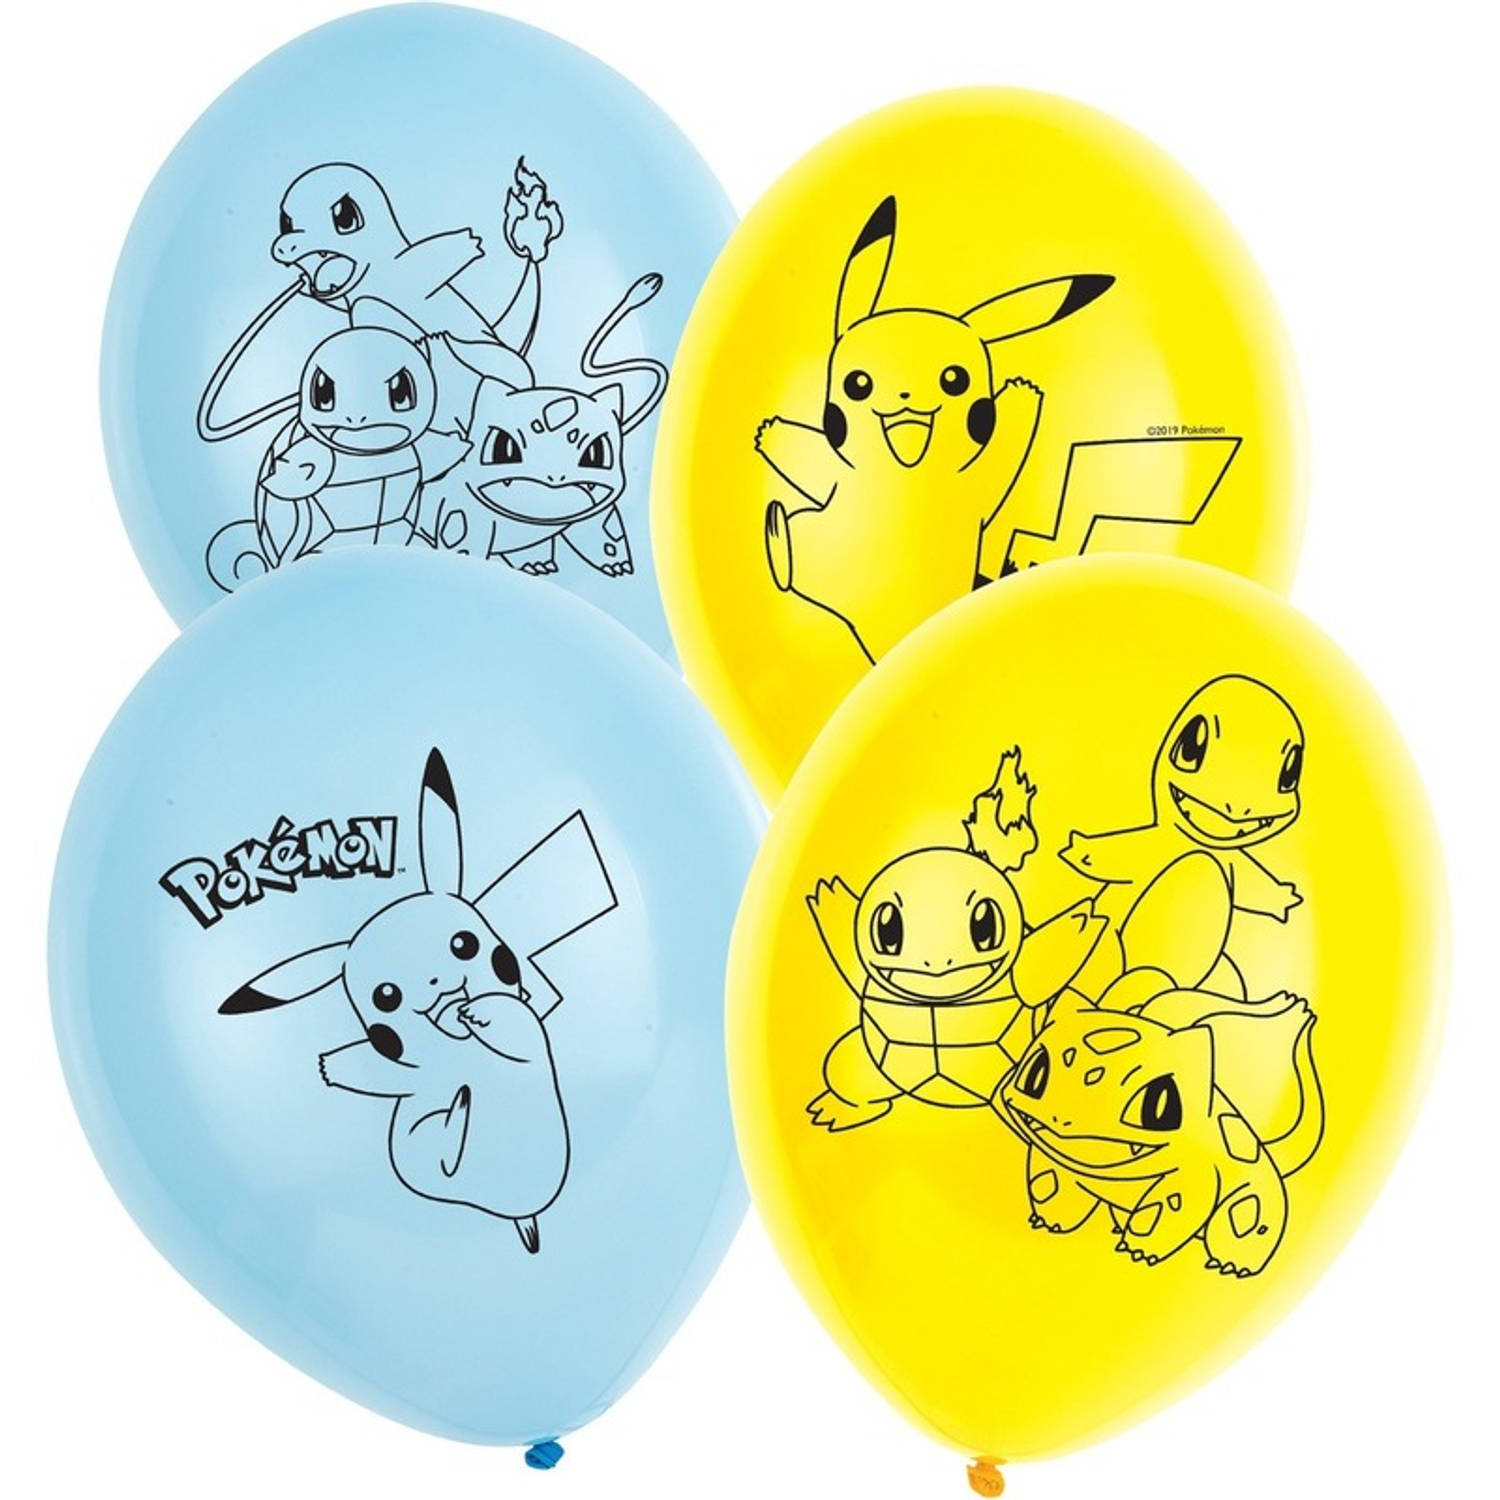 6x Pokemon ballonnen versiering voor een Pokemon themafeestje - thema feest ballon kinderfeestje/verjaardag